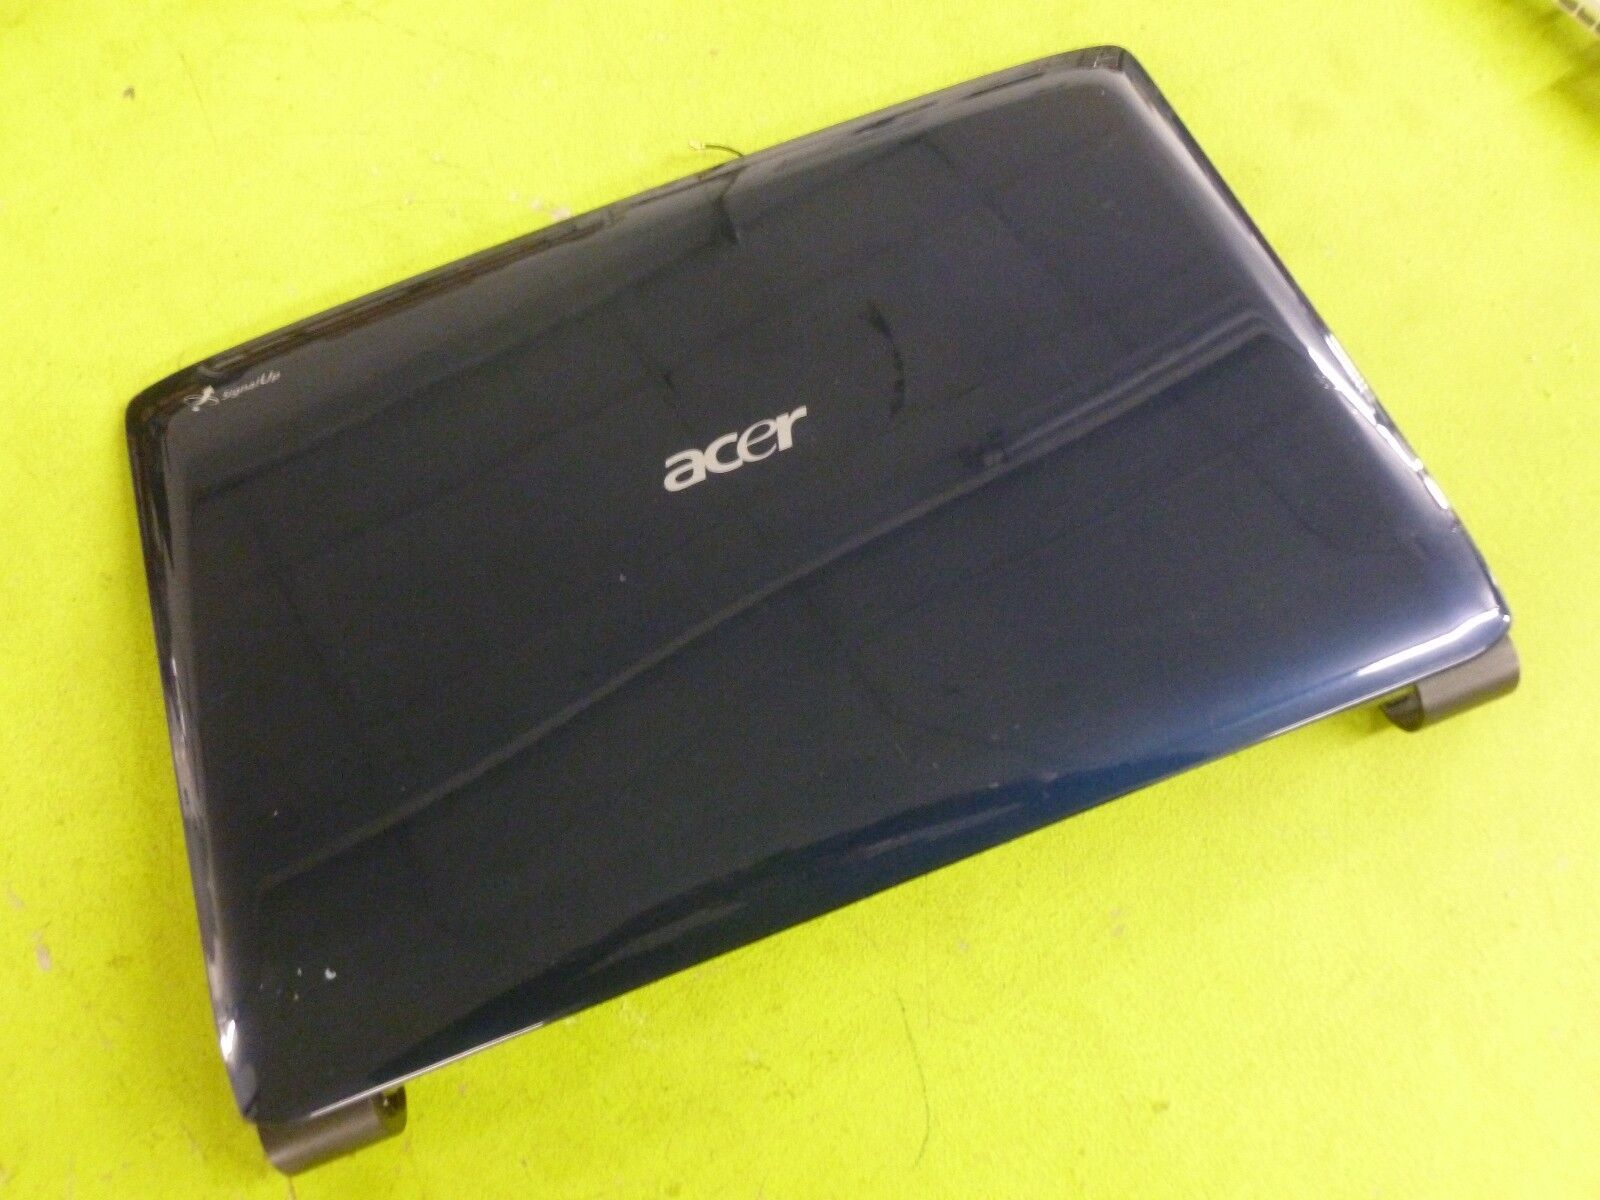 Acer Aspire 6530 6930 Top Back Cover Plastic Lid Blue EAZK2029010 w/anntenas+ we